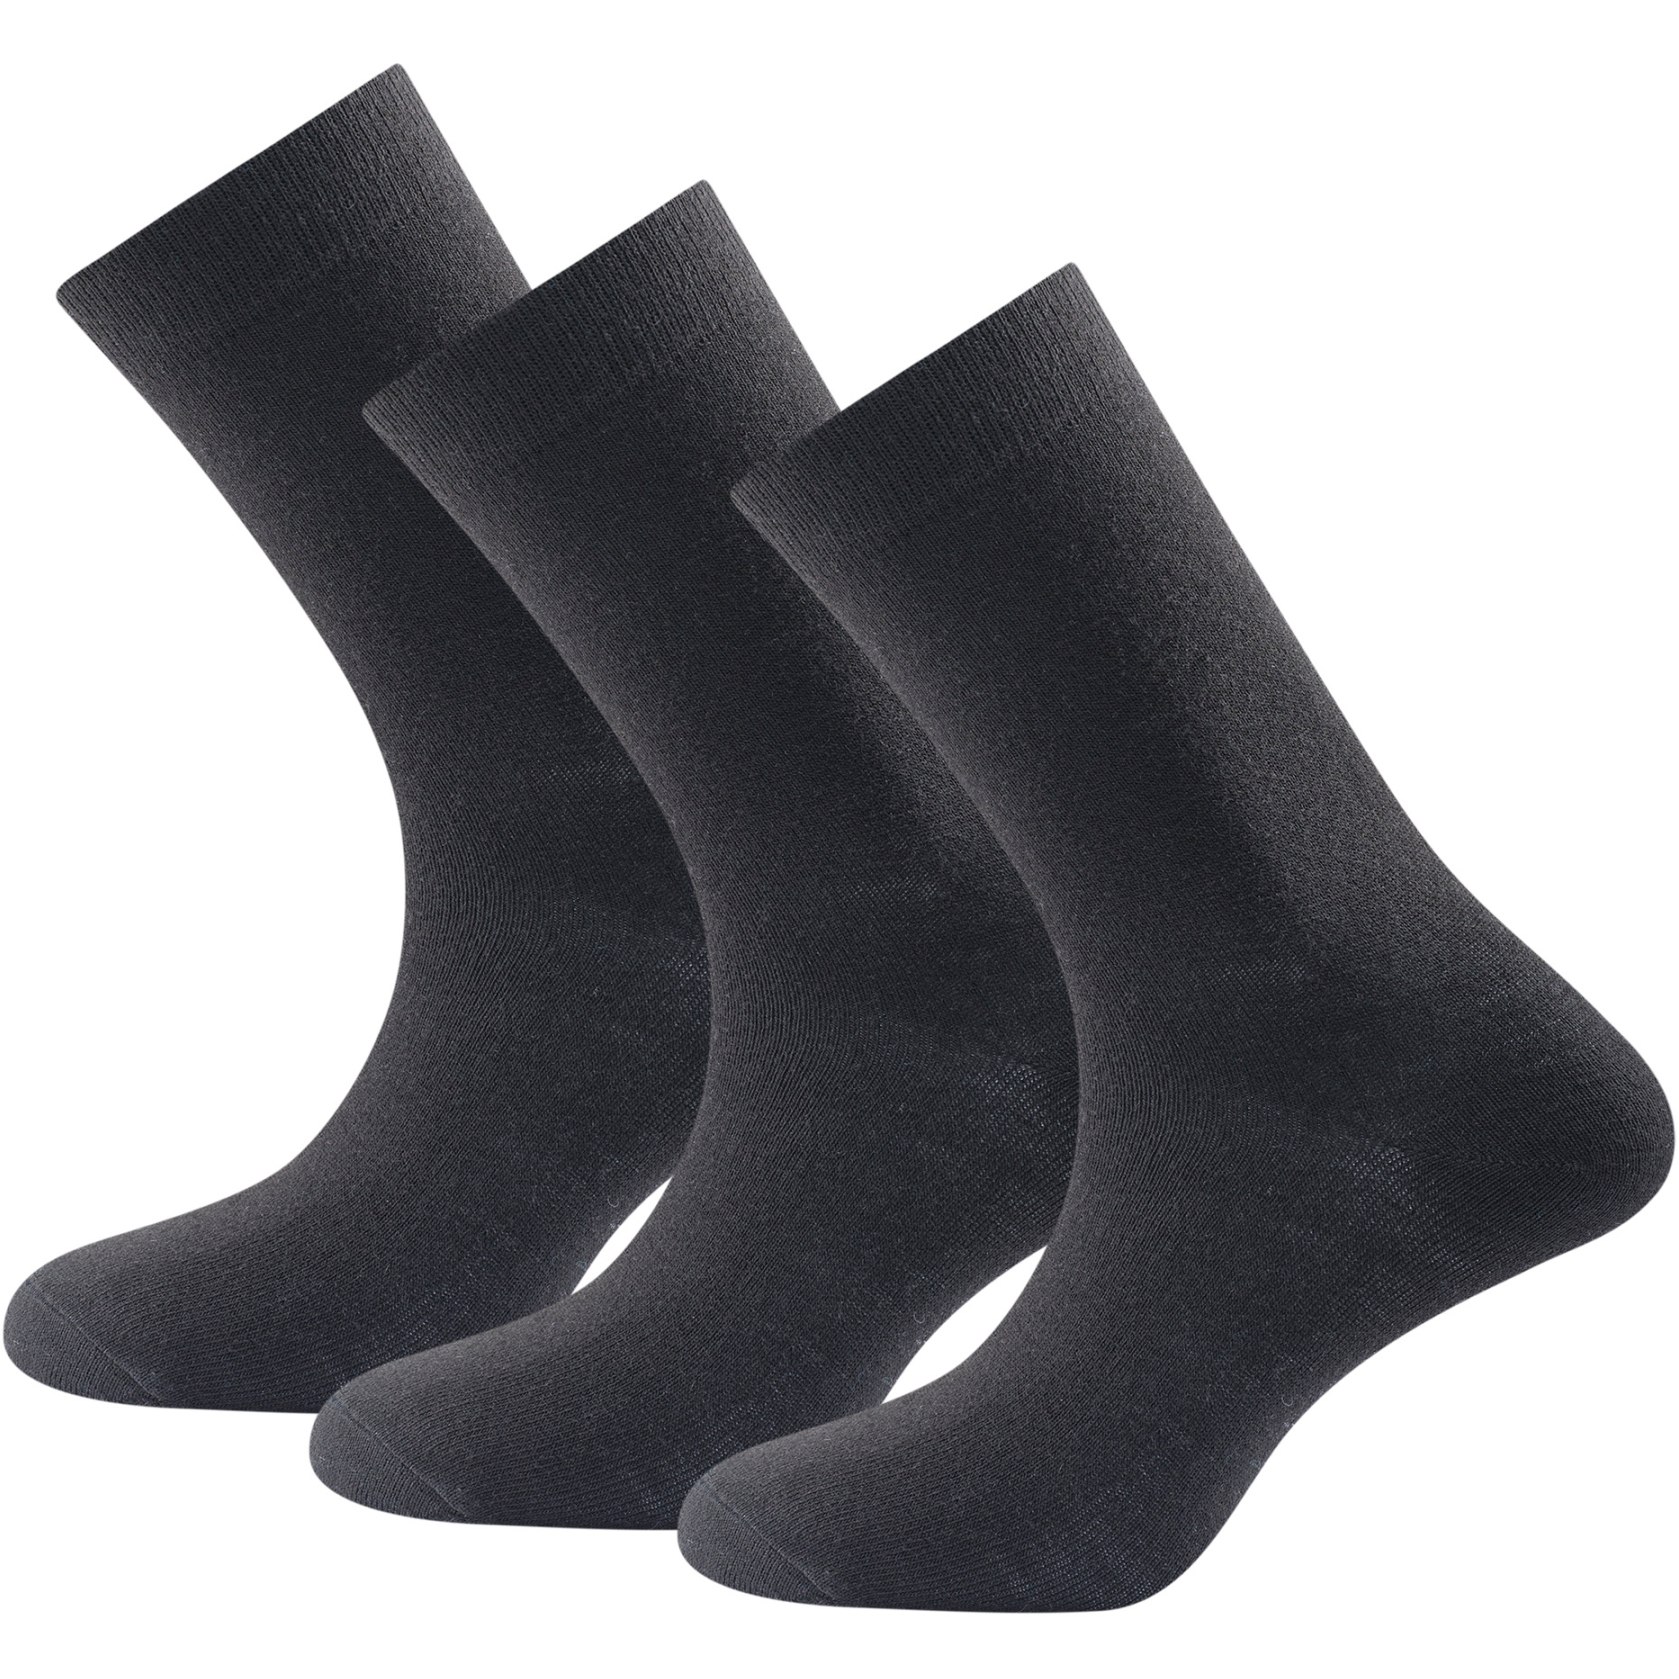 Picture of Devold Daily Merino Light Socks (3 Pack) - 950A Black